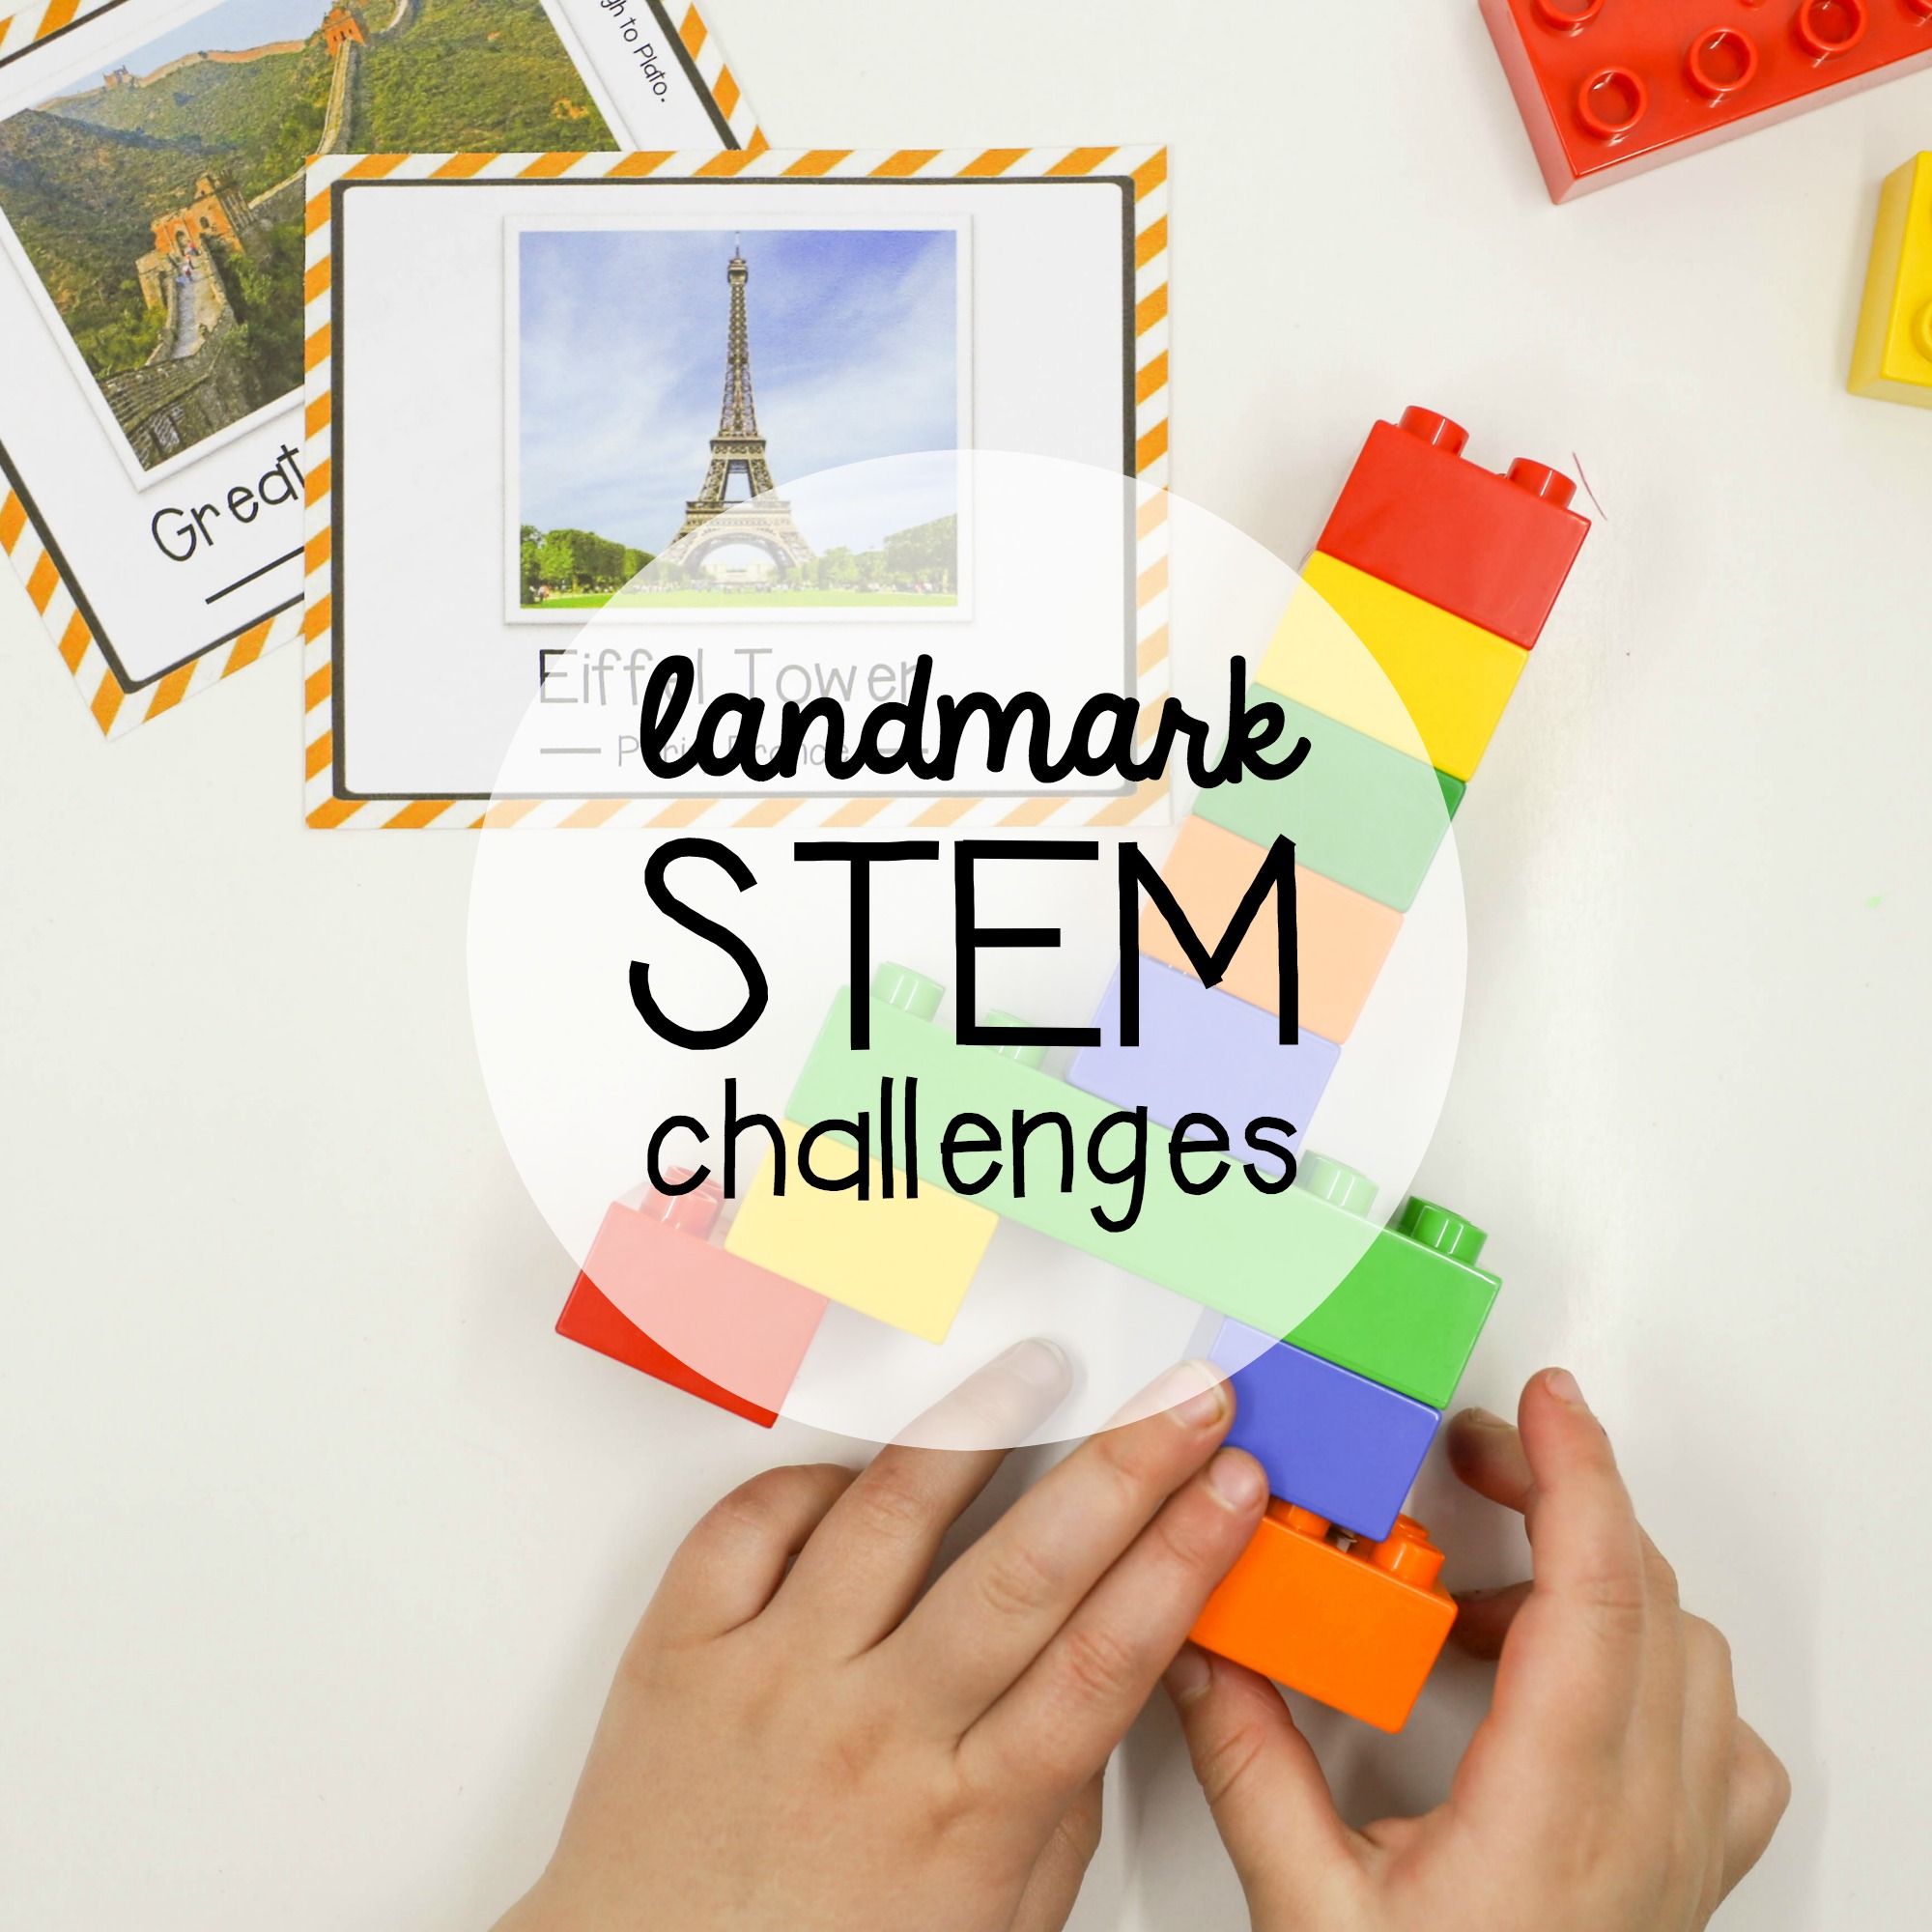 STEM Challenge: Build Famous Landmarks